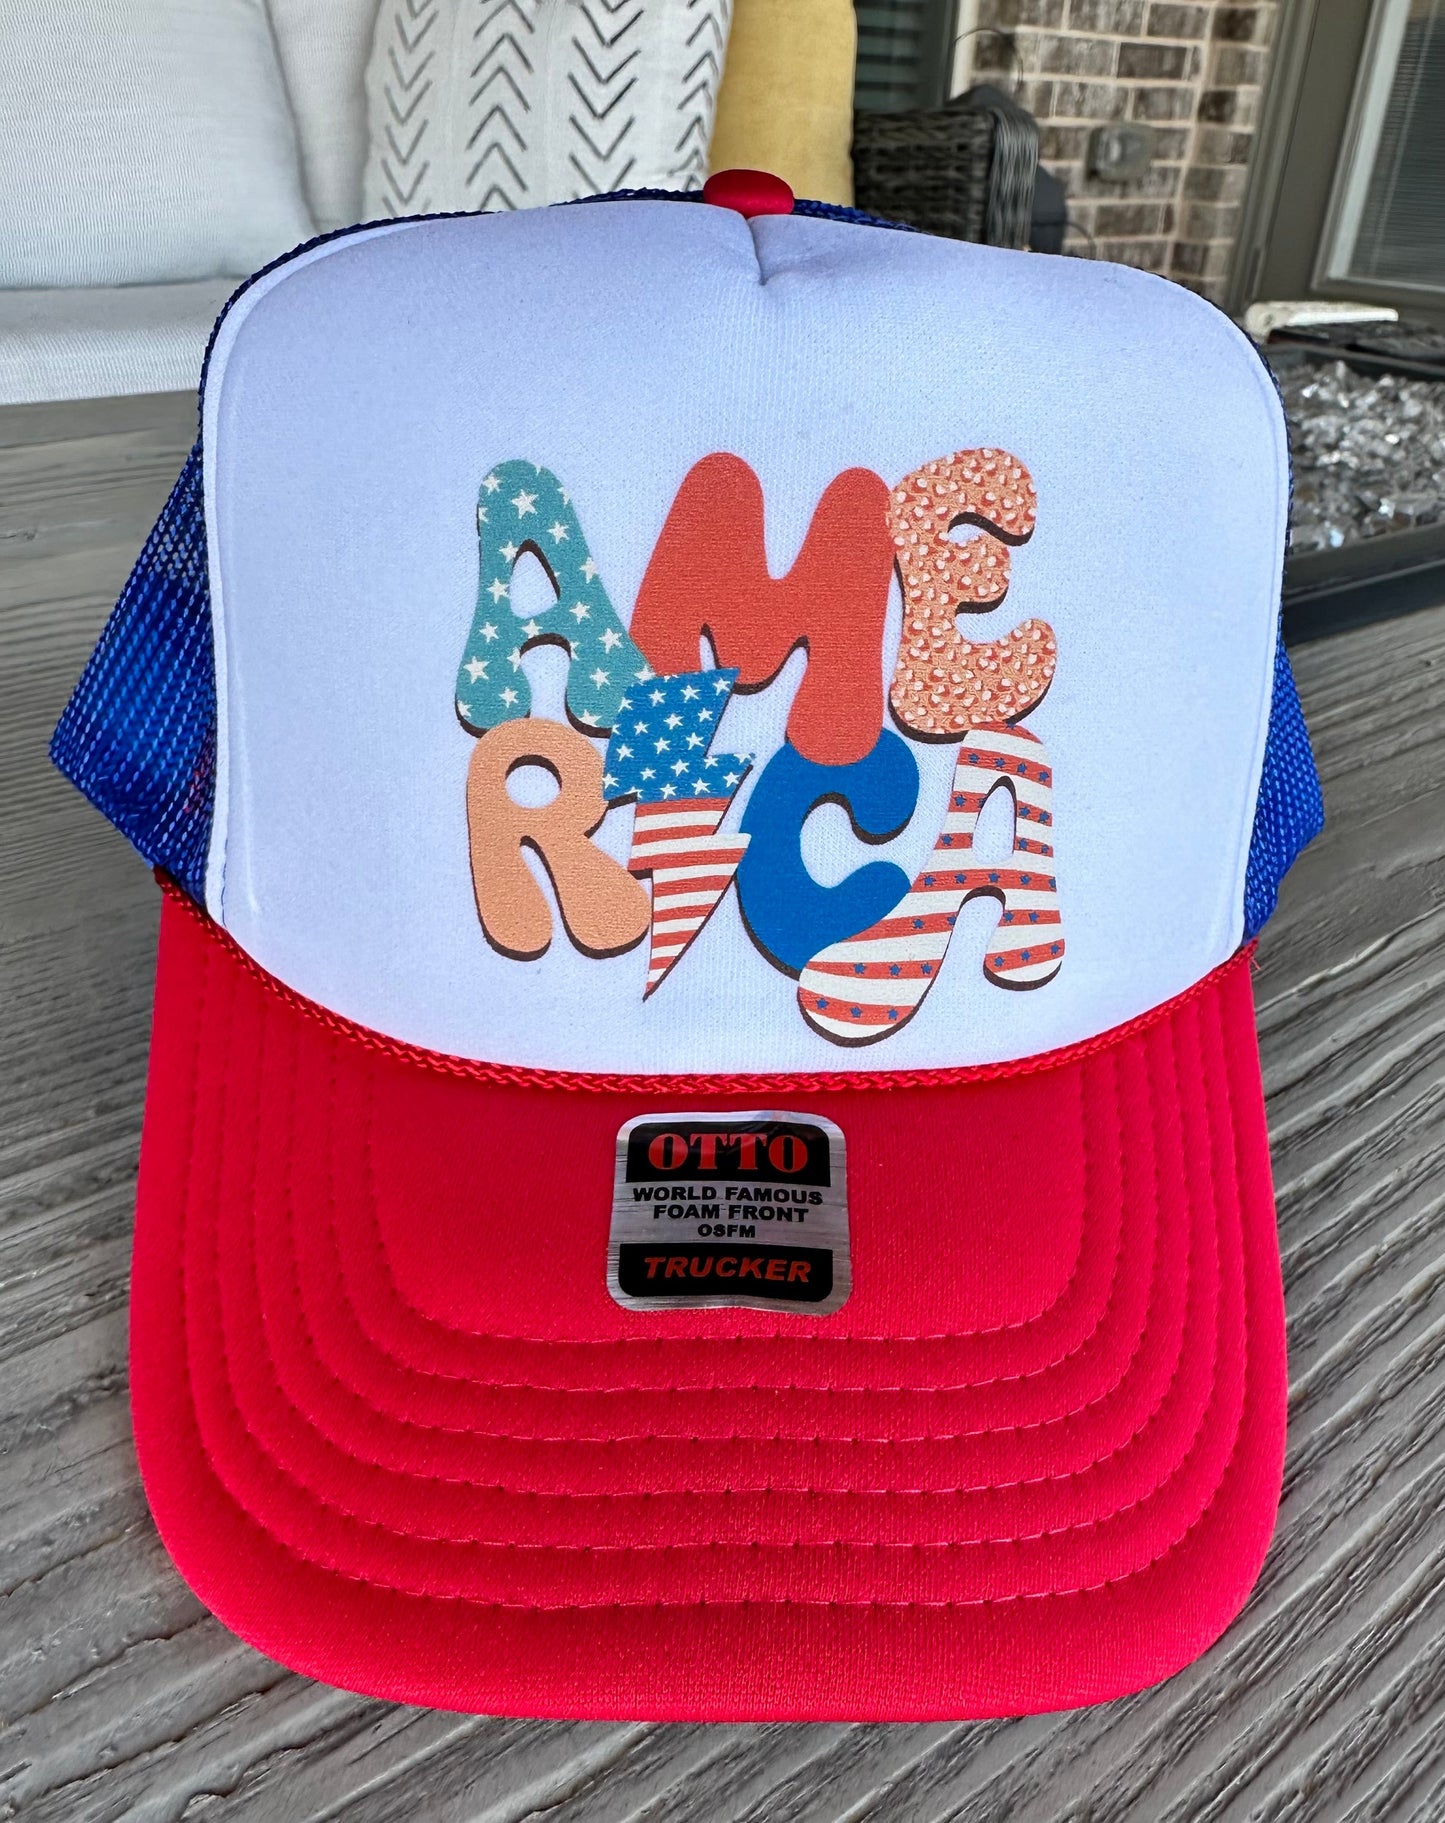 Retro America DTF Printed Red/White/Blue Trucker Hat